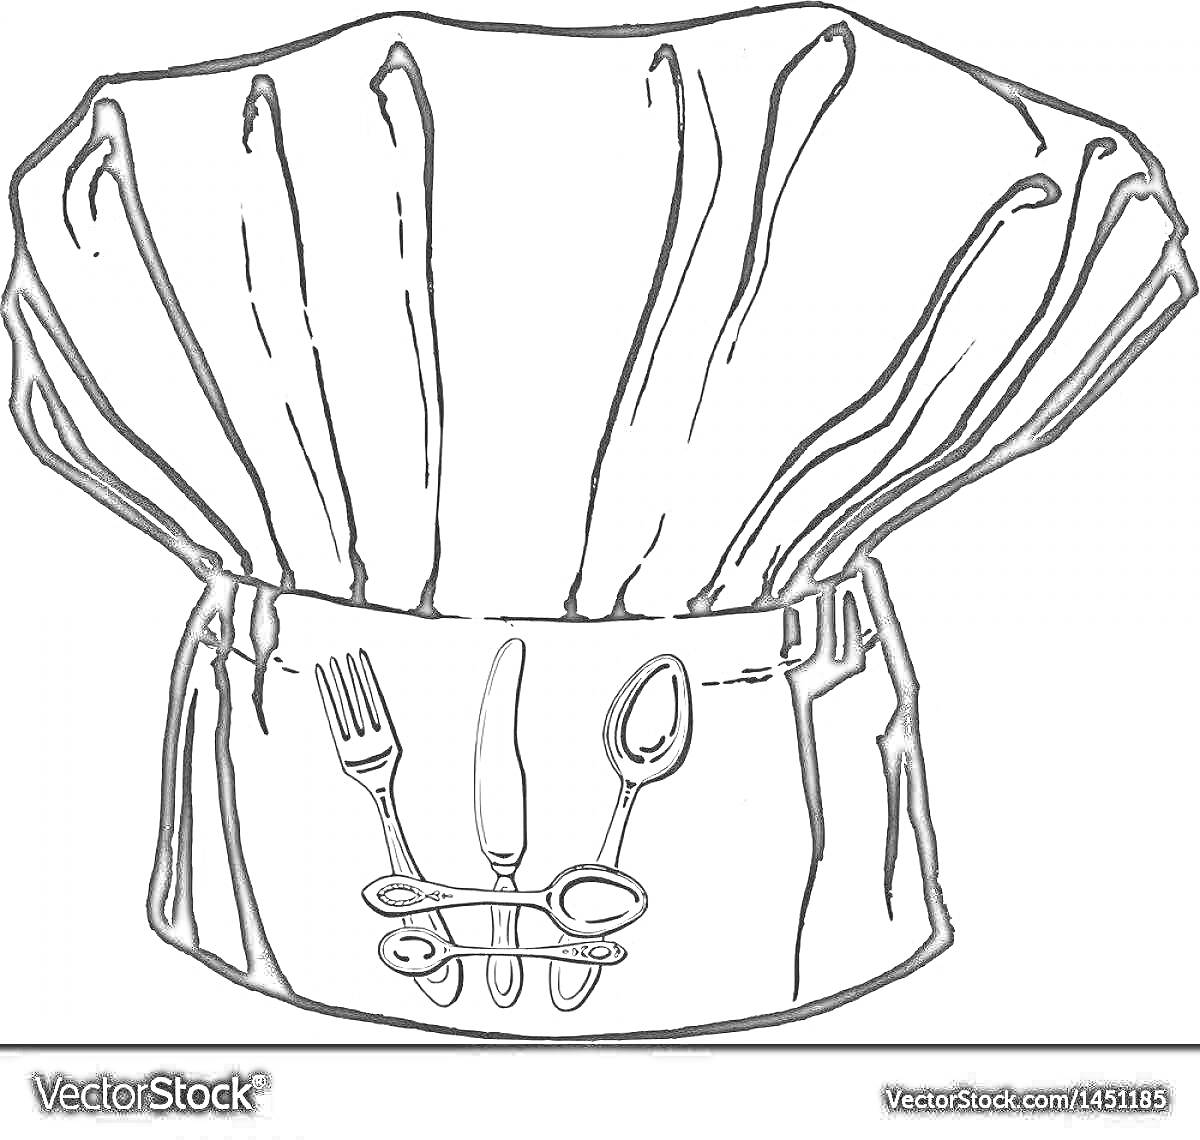 Раскраска Колпак повара с изображением вилки, ножа и ложки